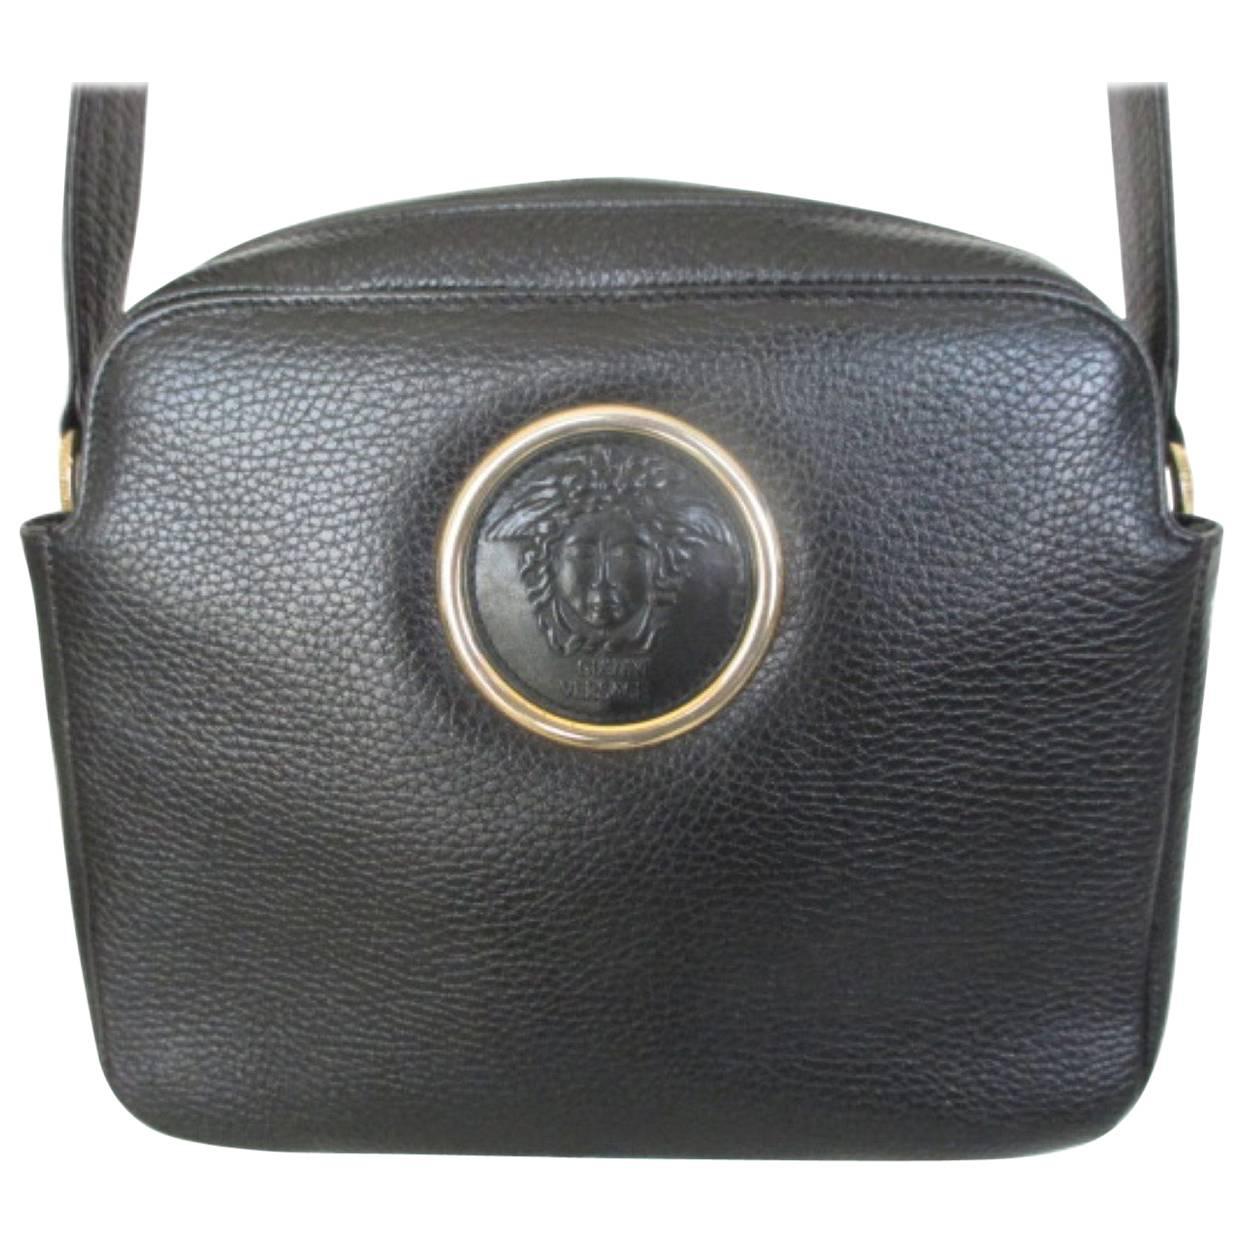 Gianni Versace black leather medusa bag For Sale